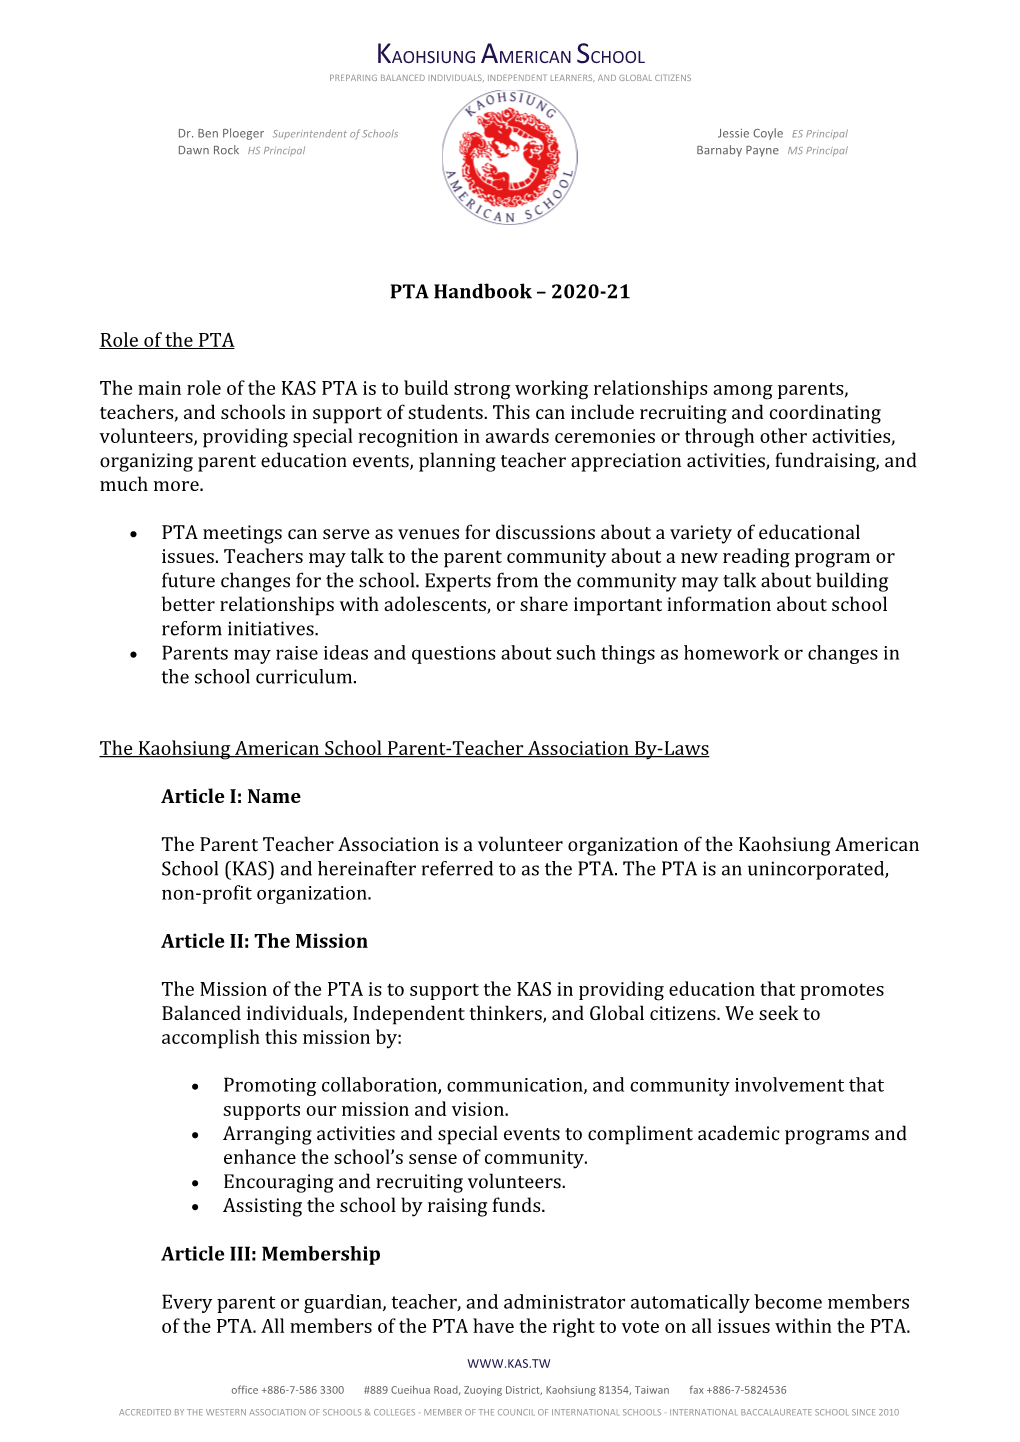 PTA Handbook – 2020-21 Role of the PTA